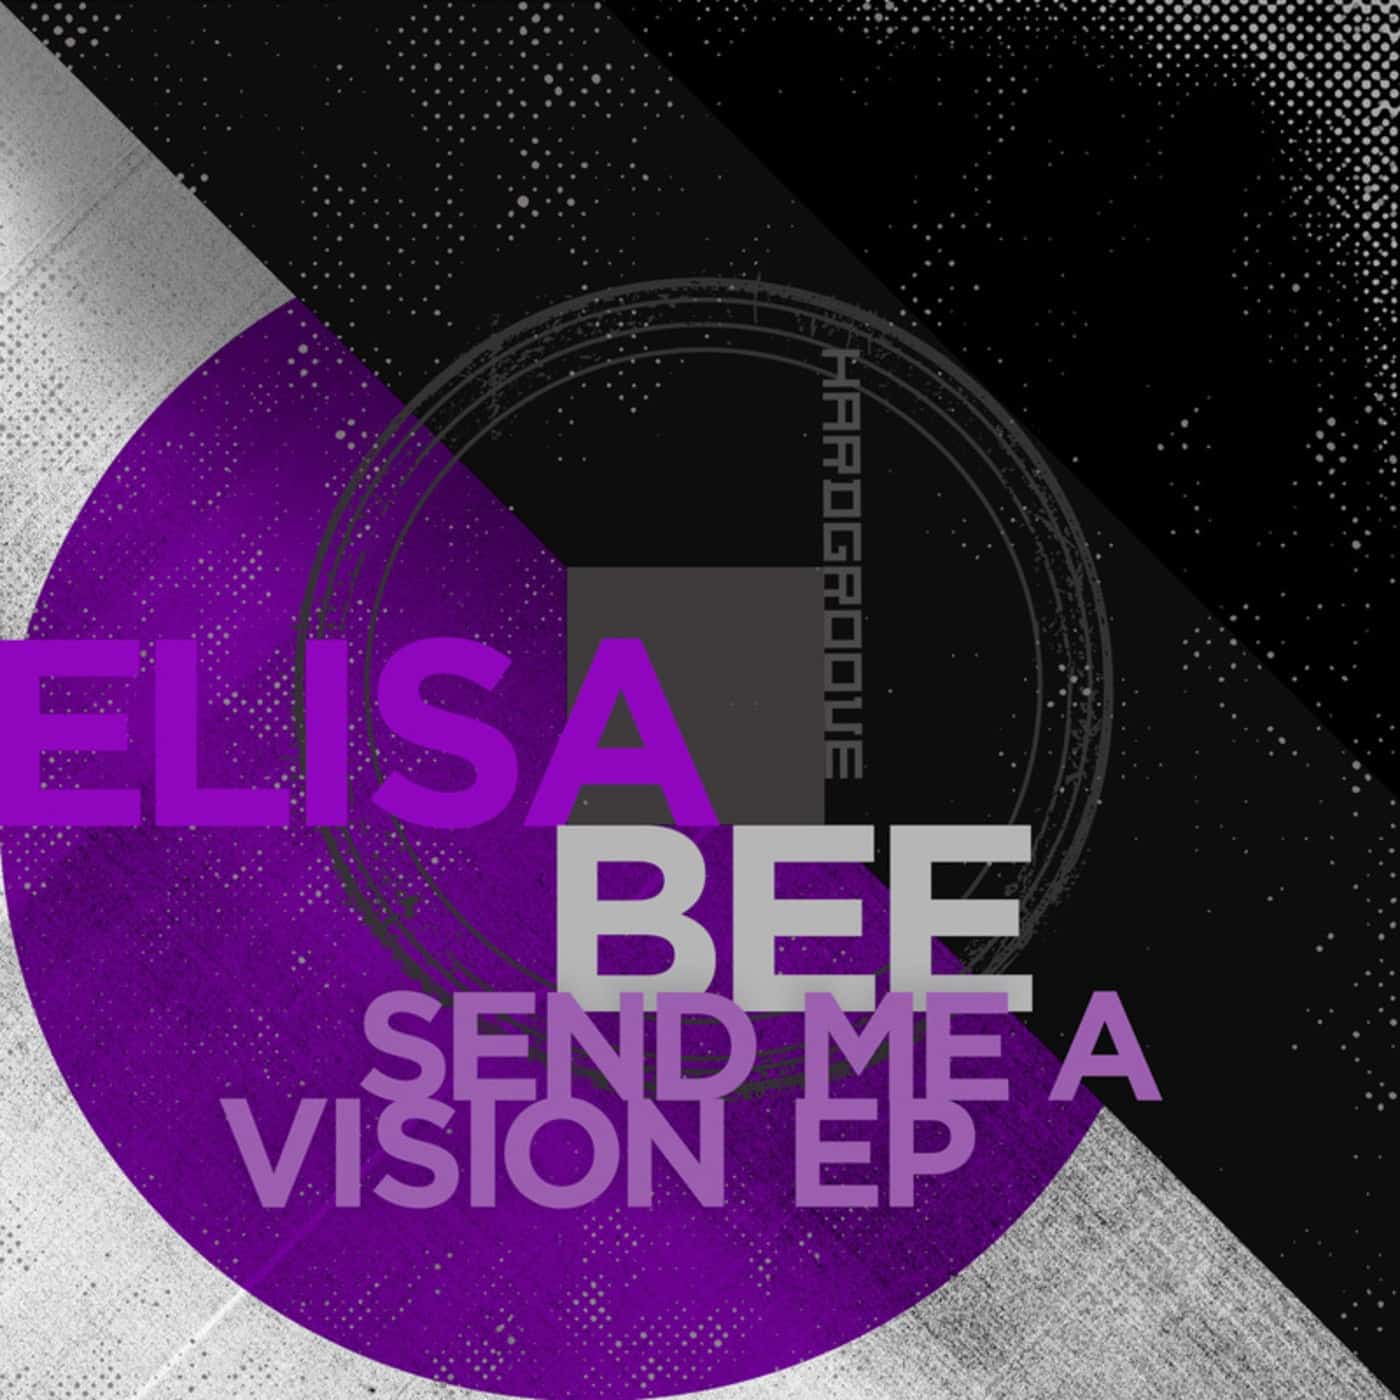 image cover: Elisa Bee - Send Me A Vision EP / HARDGROOVEDIGI008